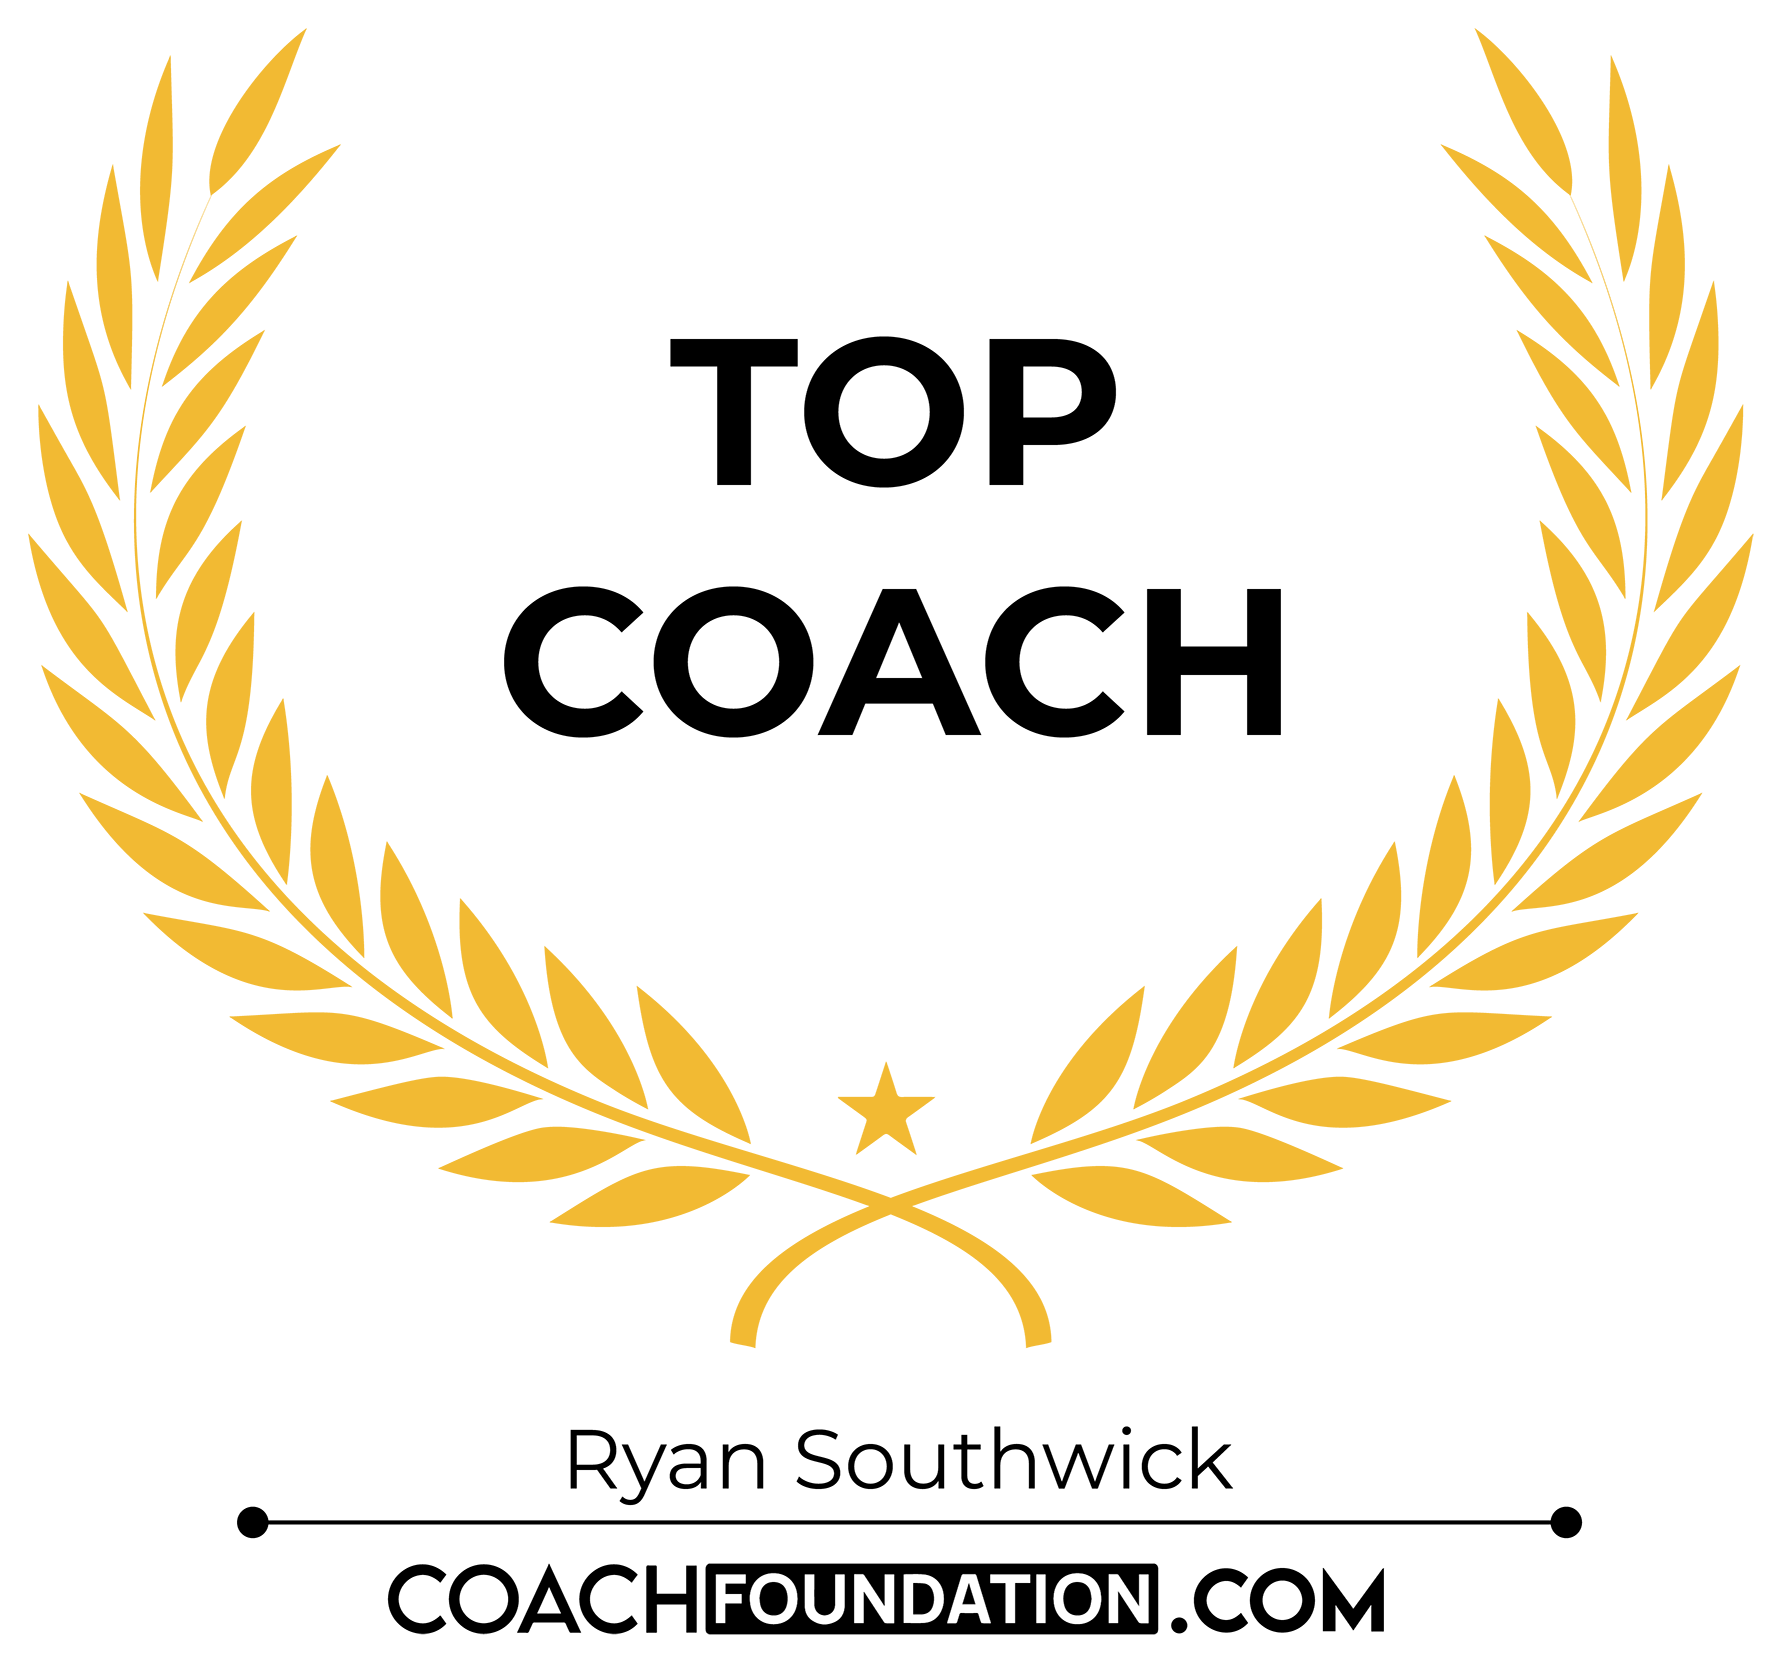 Top Coach: Ryan Southwick. CoachFoundation.com